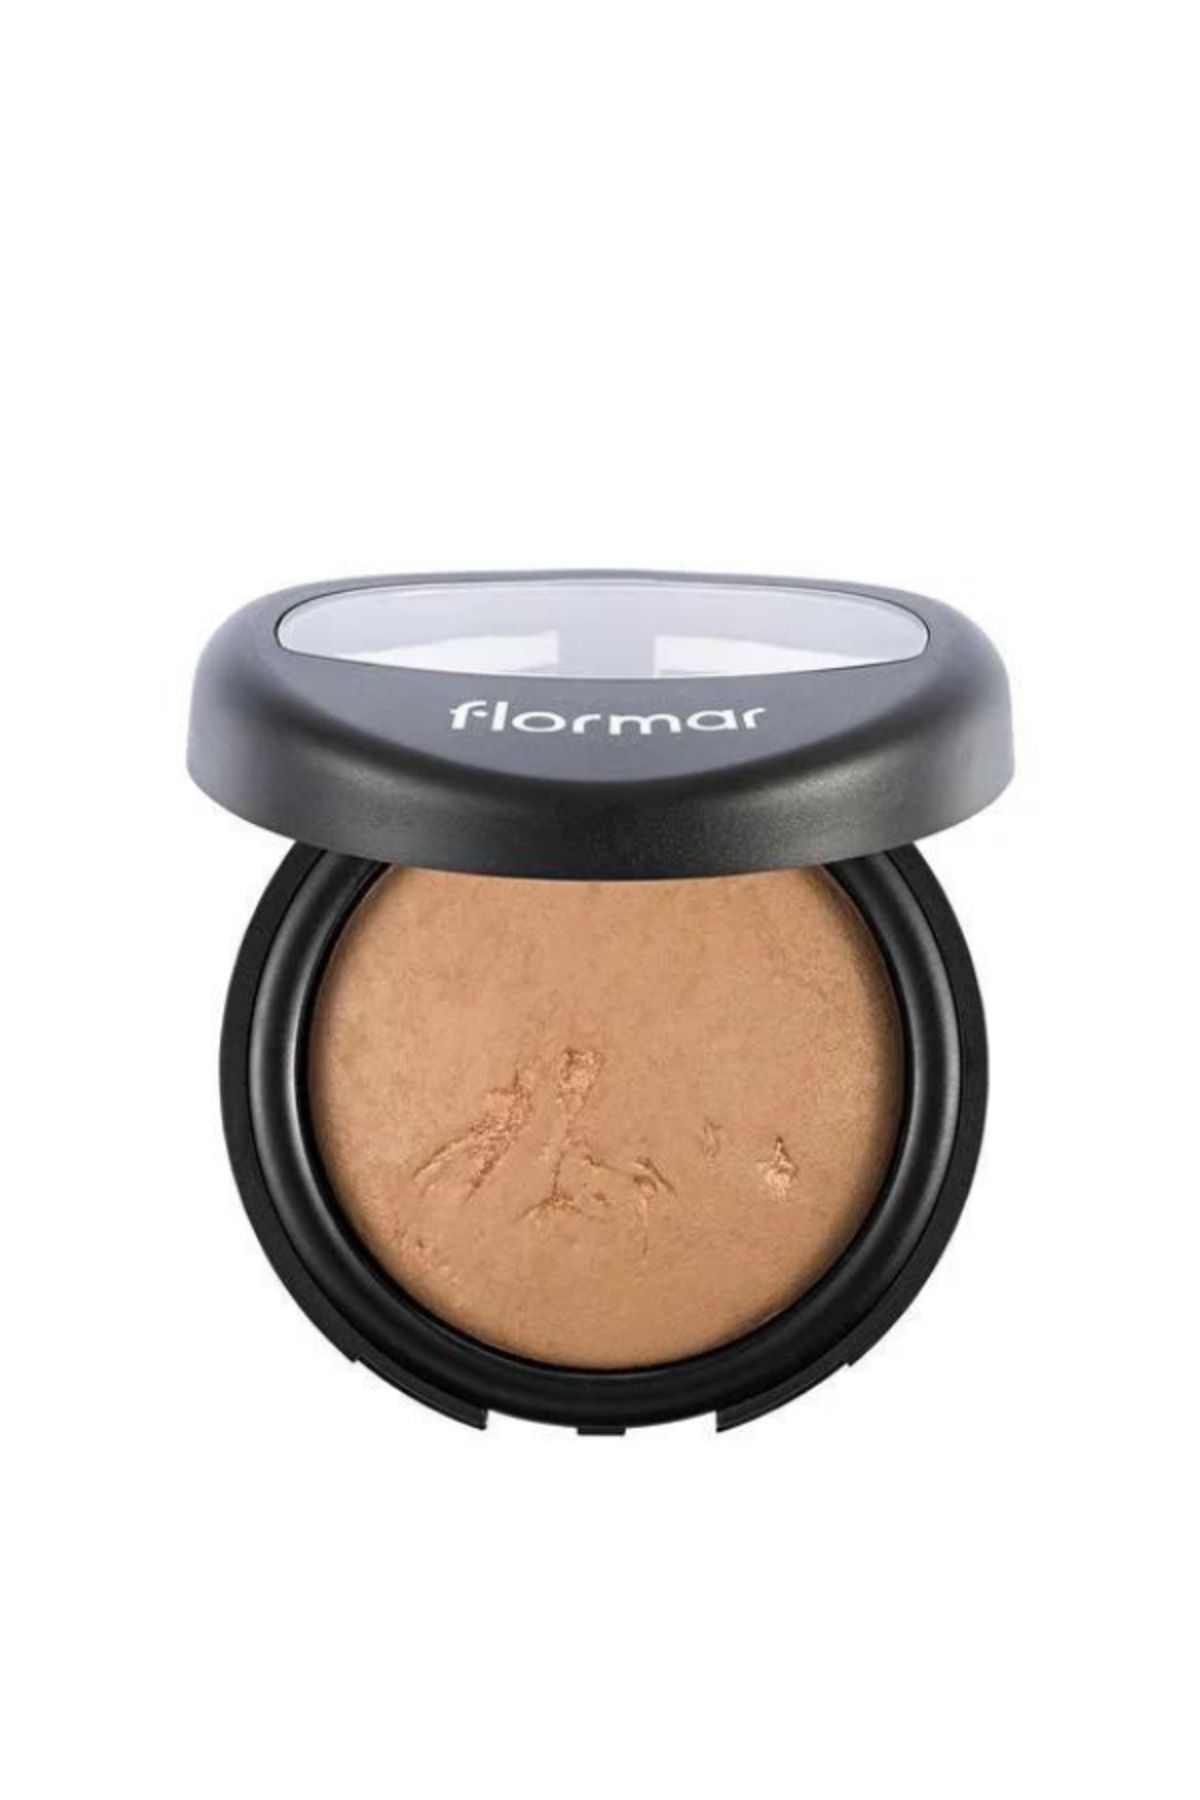 Flormar مجموعه 6 آرایش / کانسیلر / پالت روشنایی / ایلاینر ژل / رژ لب مایع